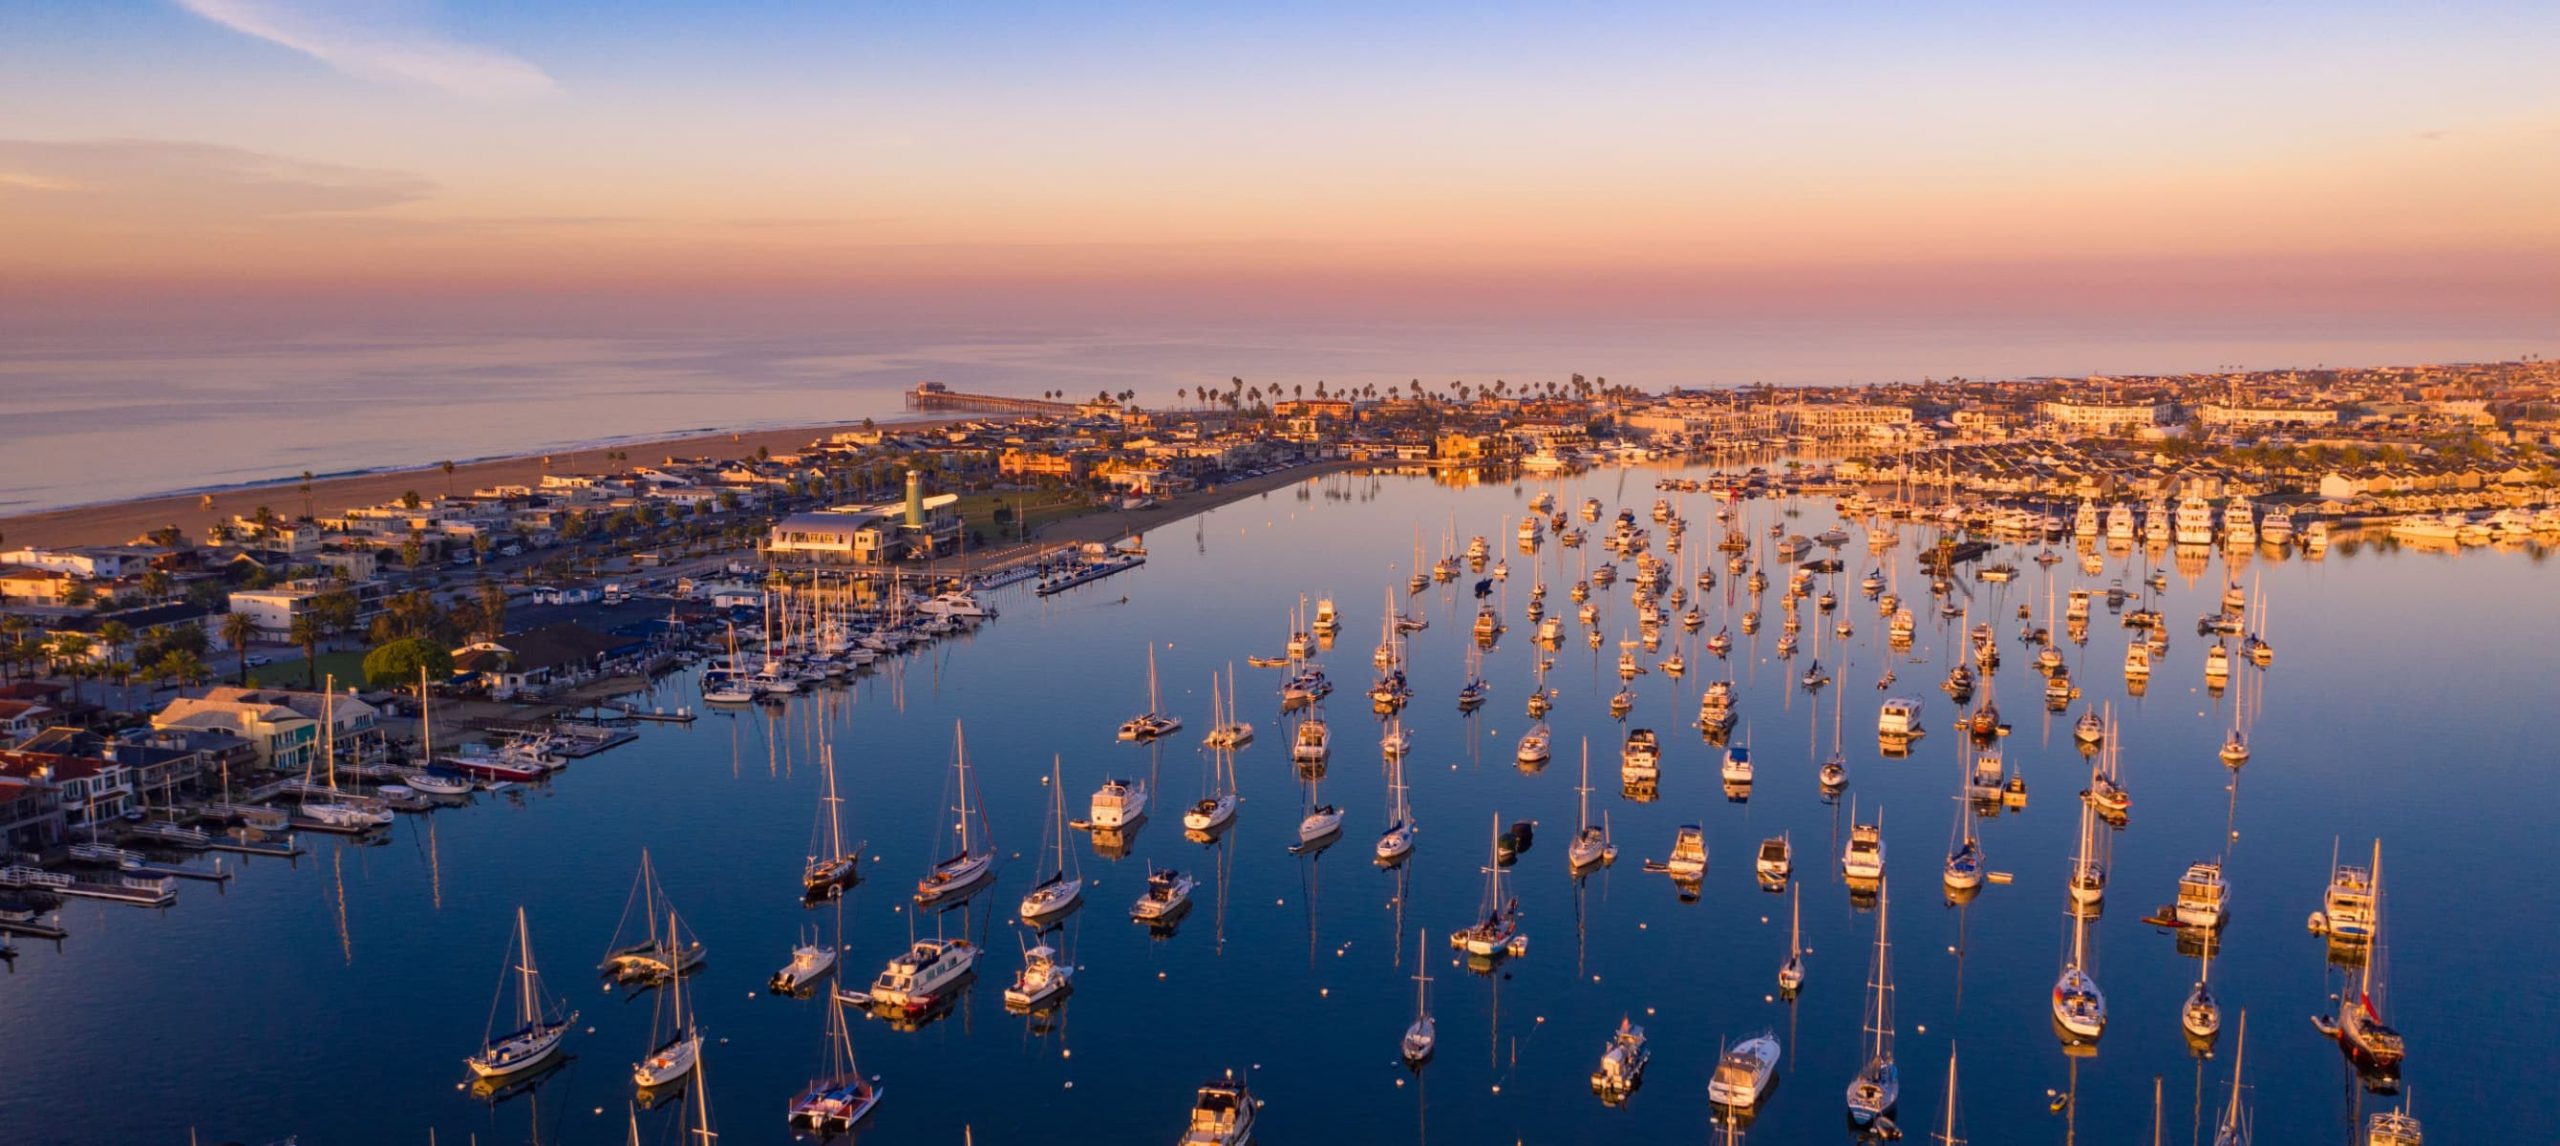 a view of Newport Beach Marina